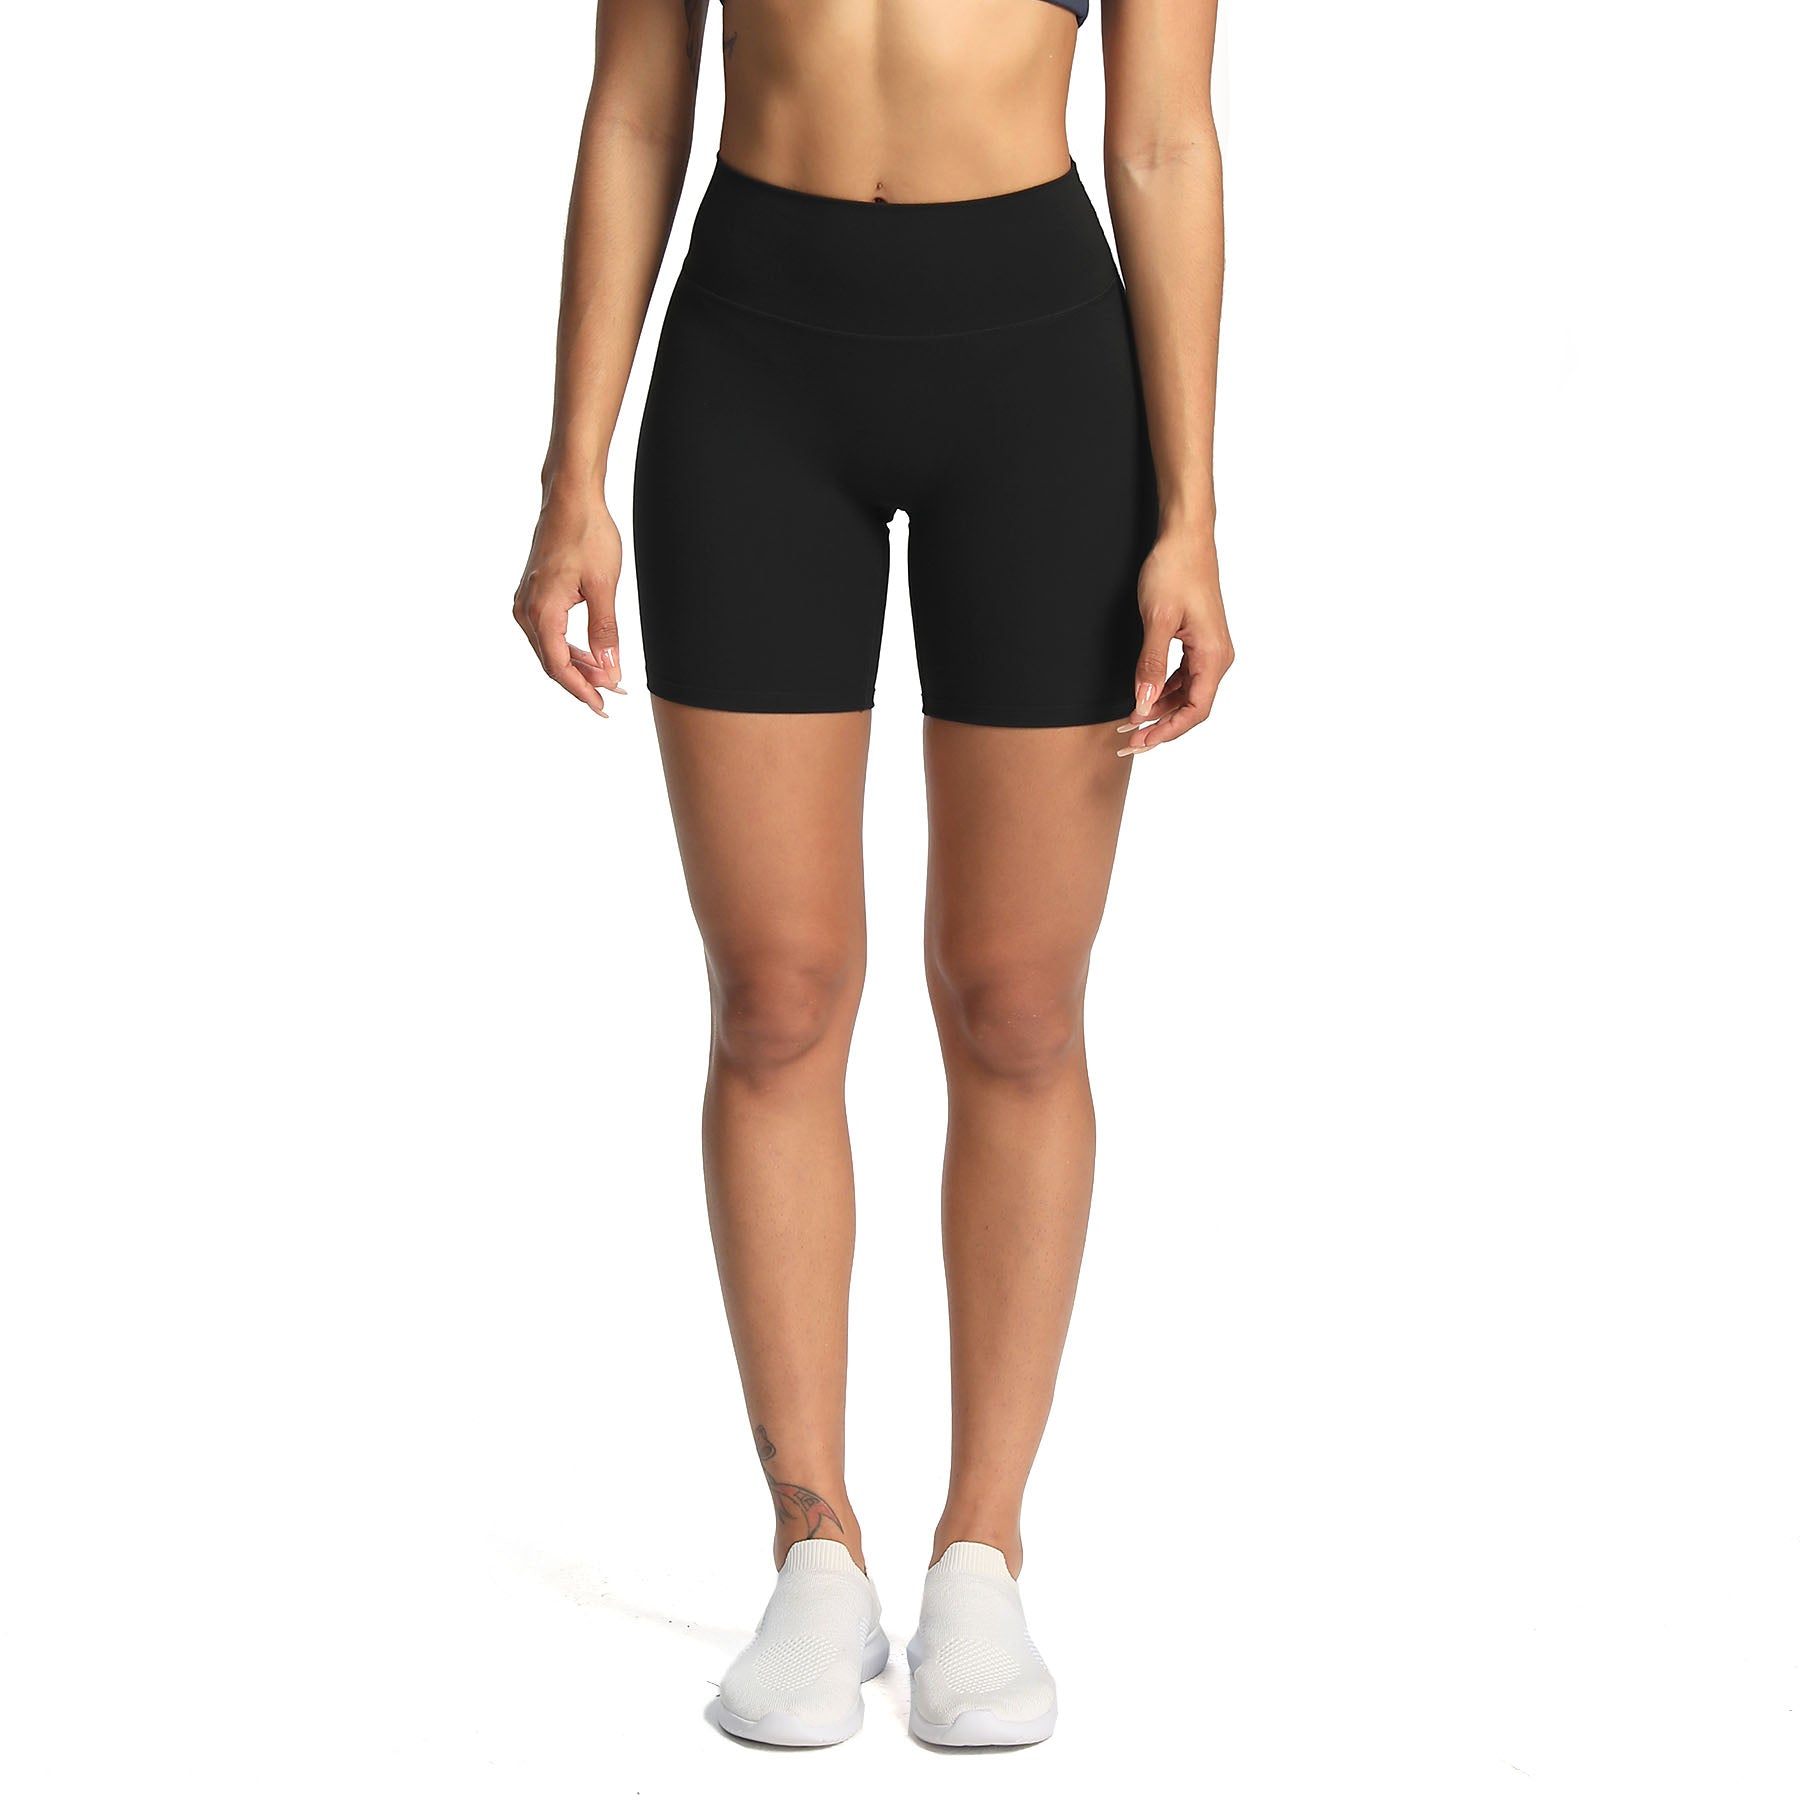 Aoxjox Women's High Waist Biker Shorts Solid Yoga Active Gym